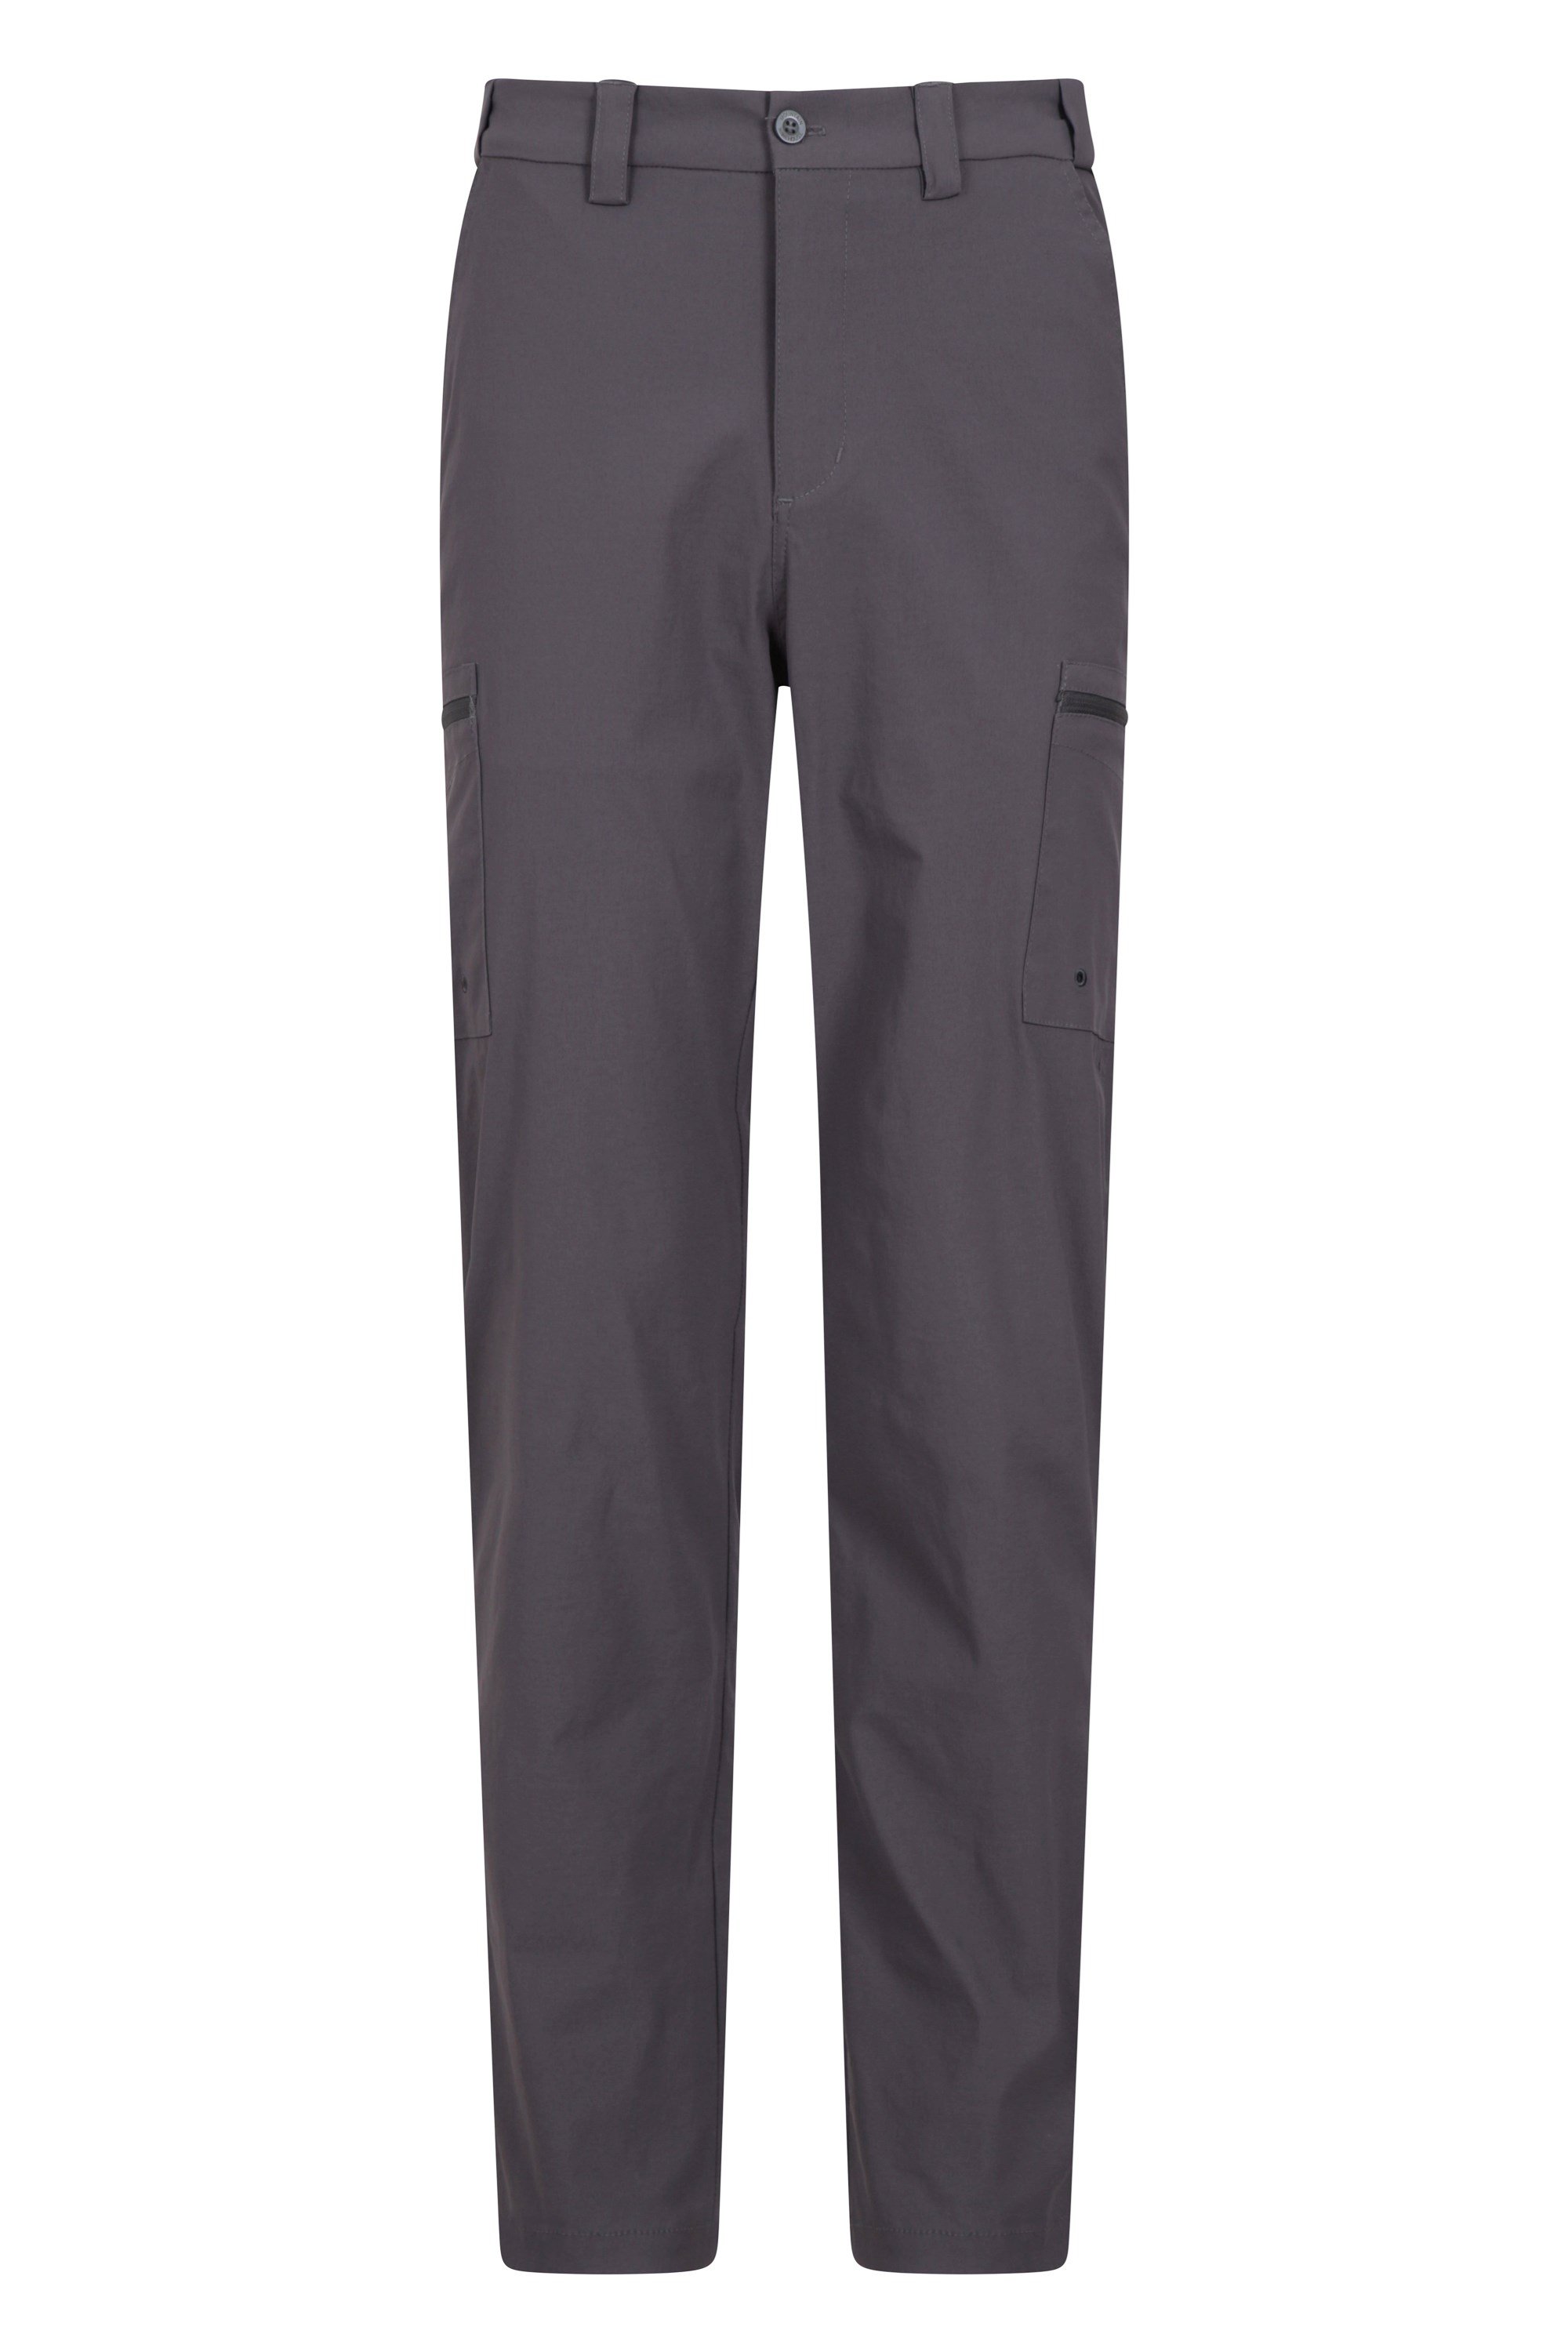 Trek Stretch Mens Trousers - Short Length - Grey